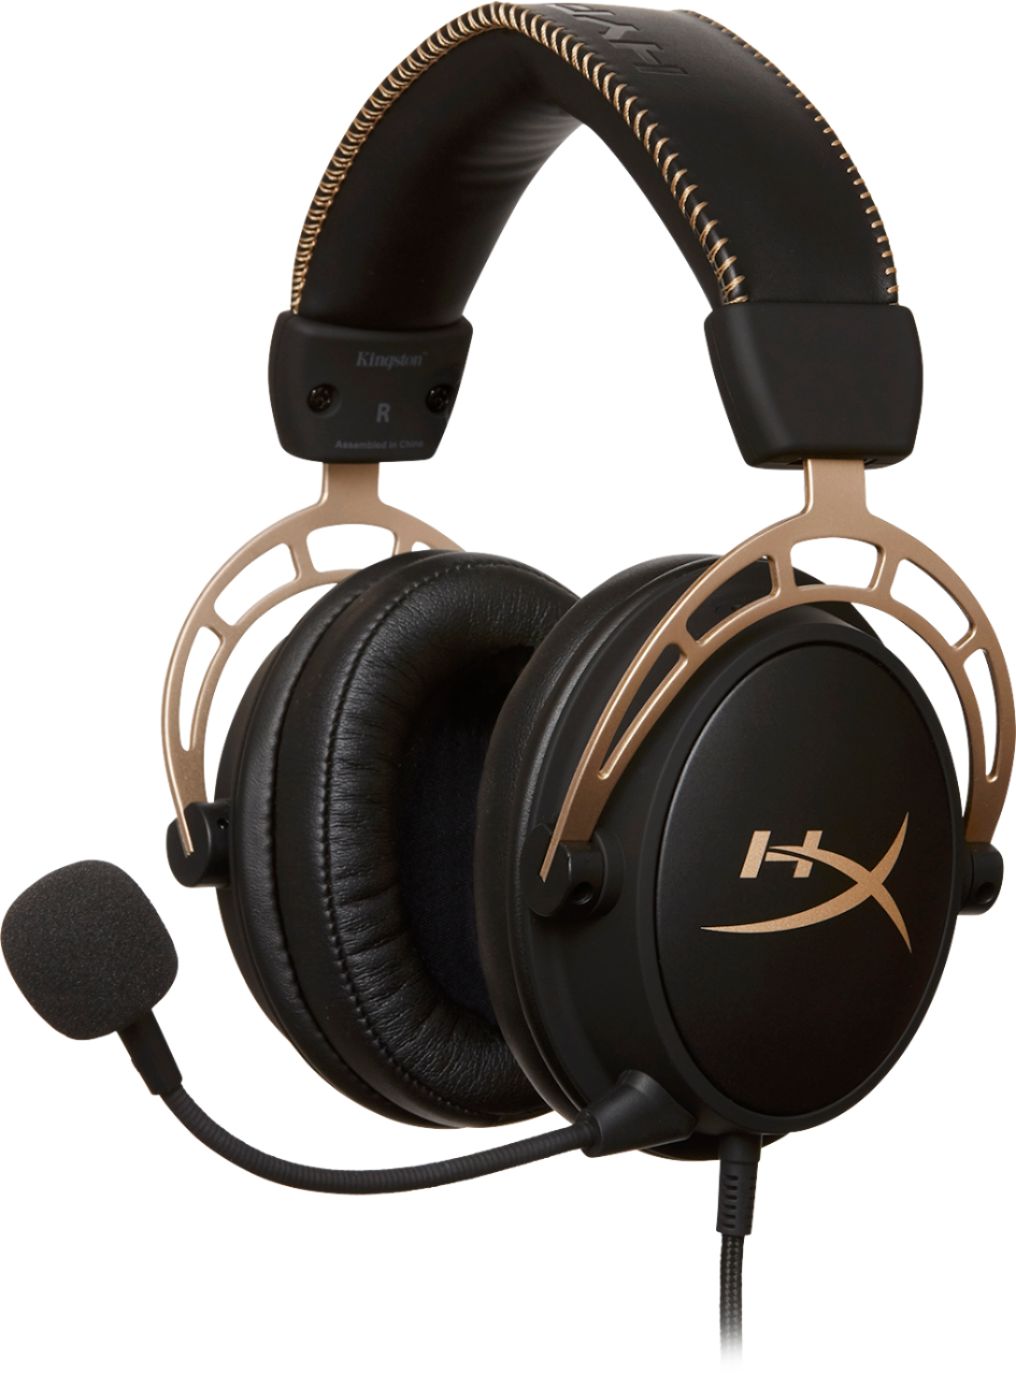 hyperx headset pc